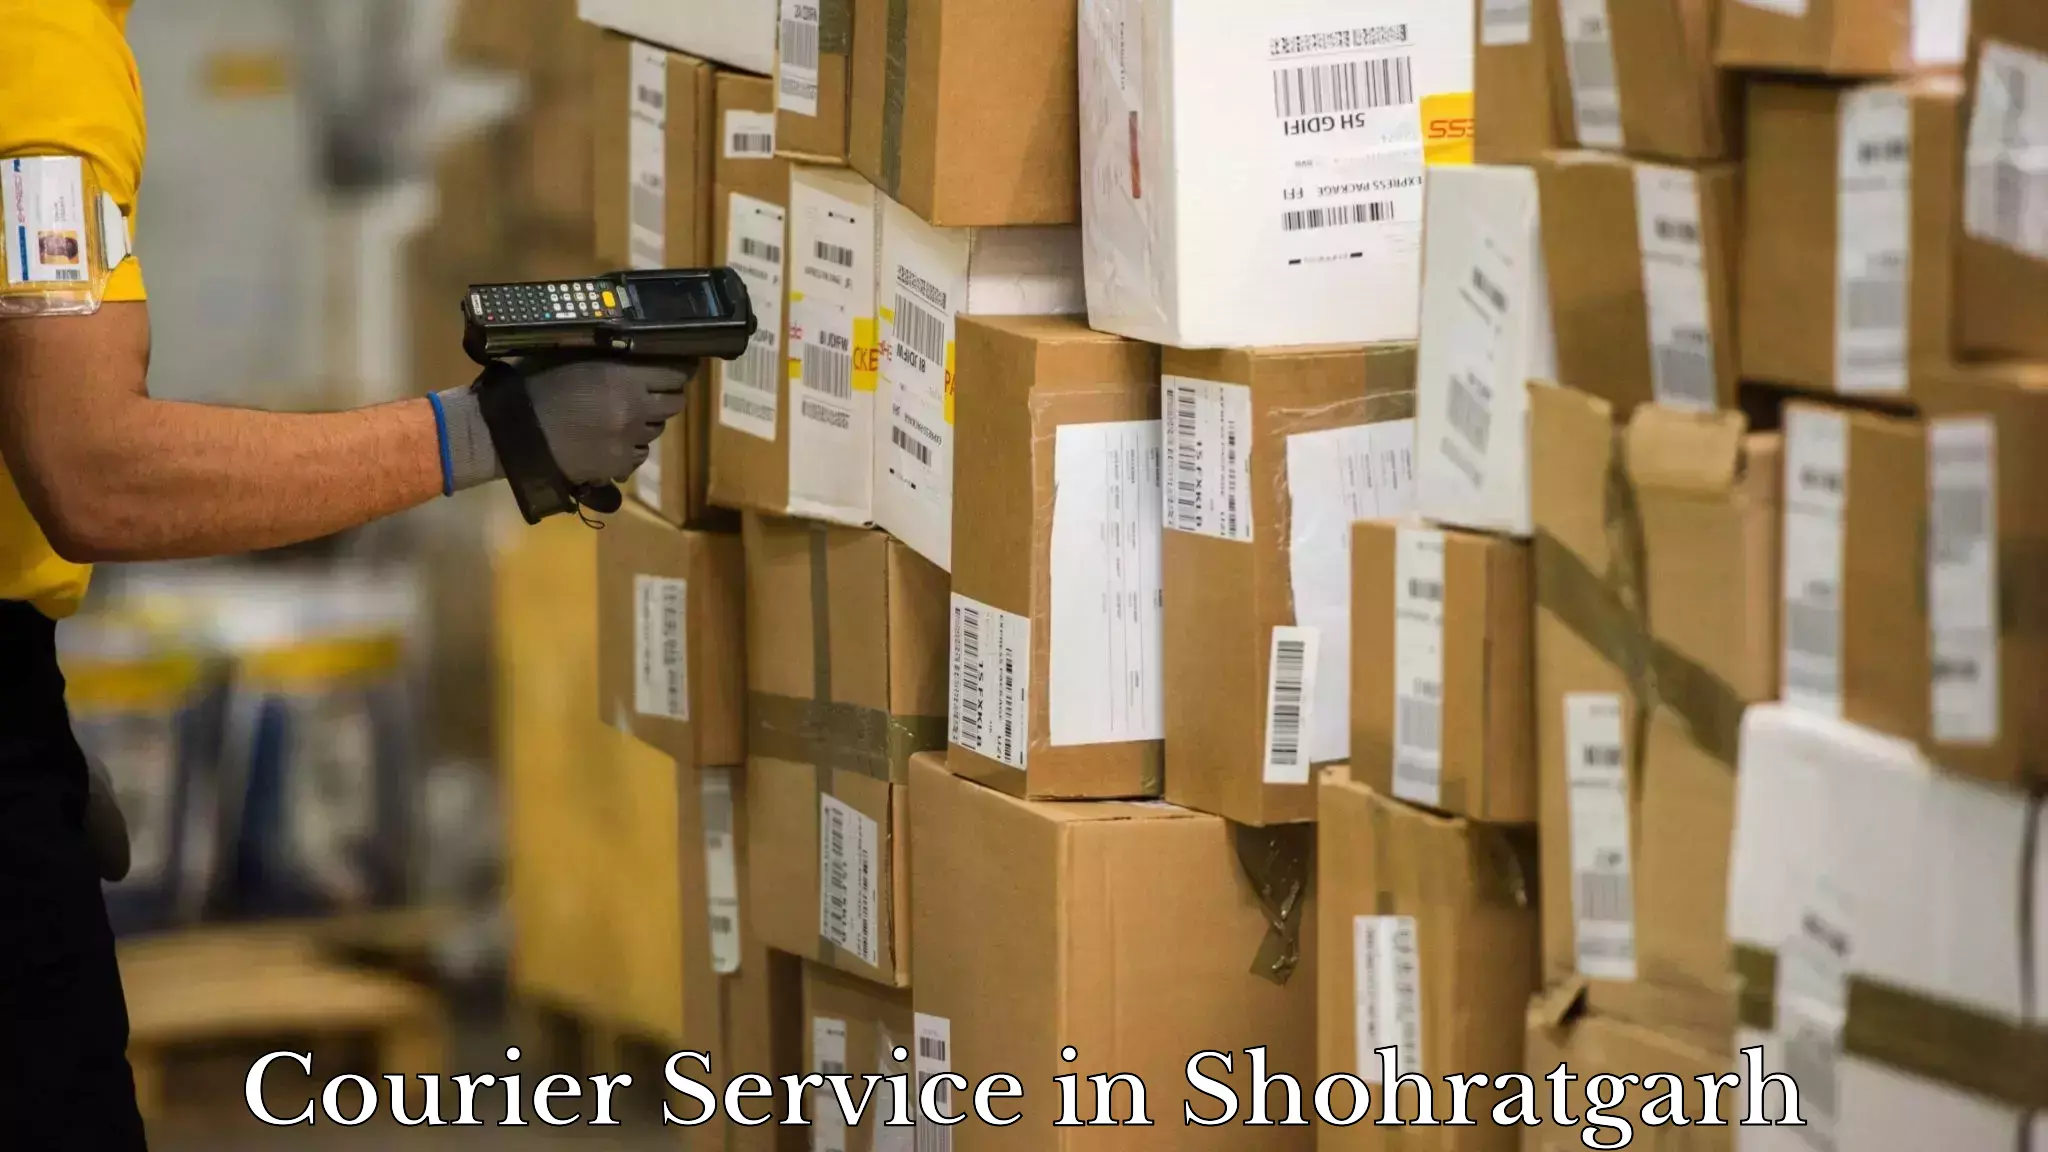 Courier service partnerships in Shohratgarh